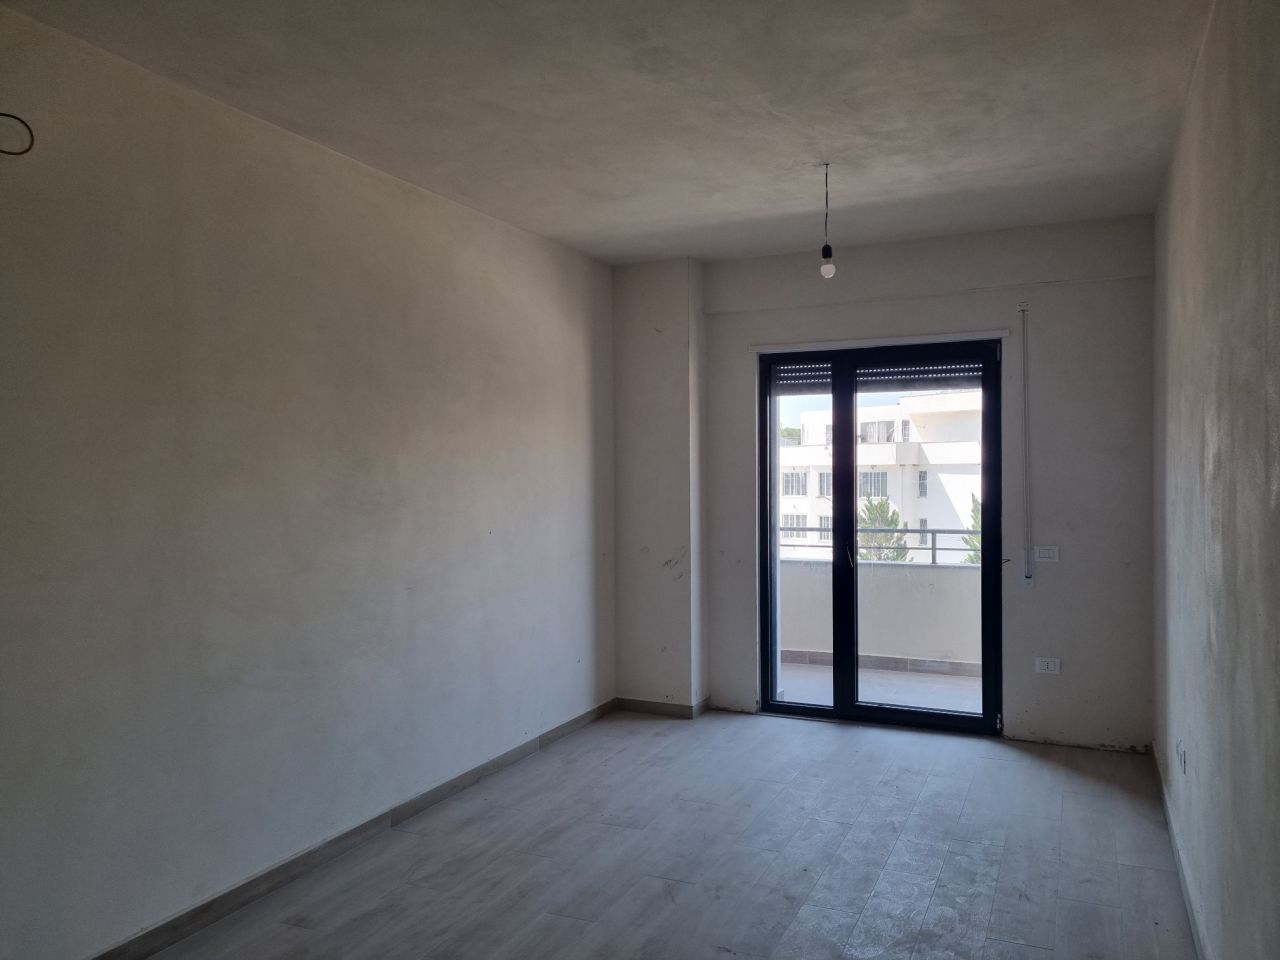 Apartament Per Shitje Ne Mali Robit Golem Durres Albania, Ndodhet Ne Nje Zone Te Qete, Prane Plazhit